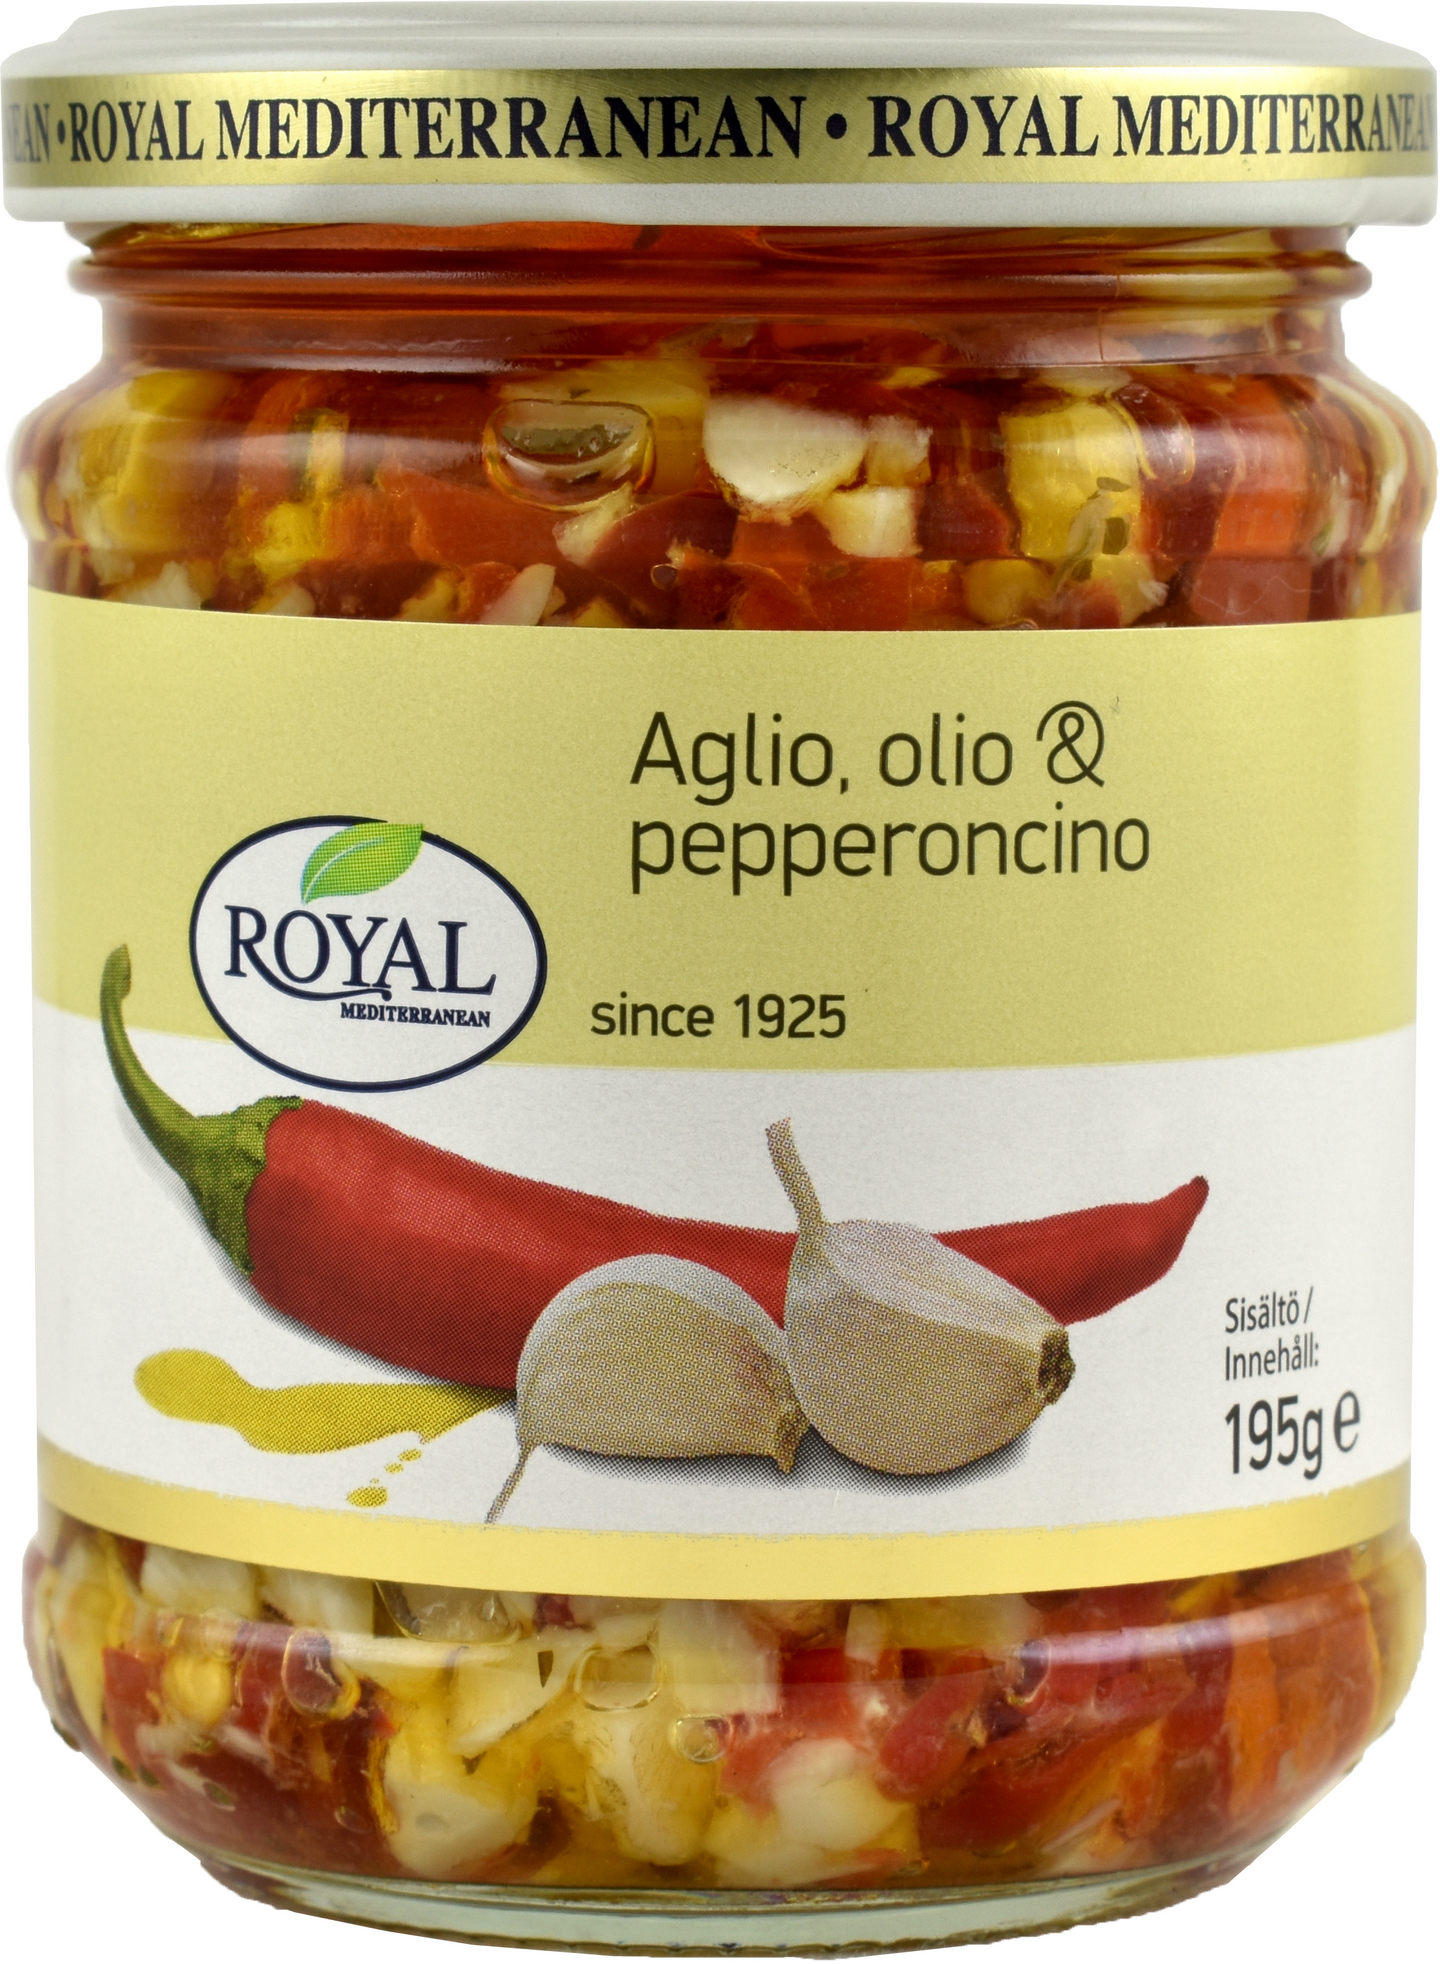 Royal Aglio, olio & pepperoncino 195g